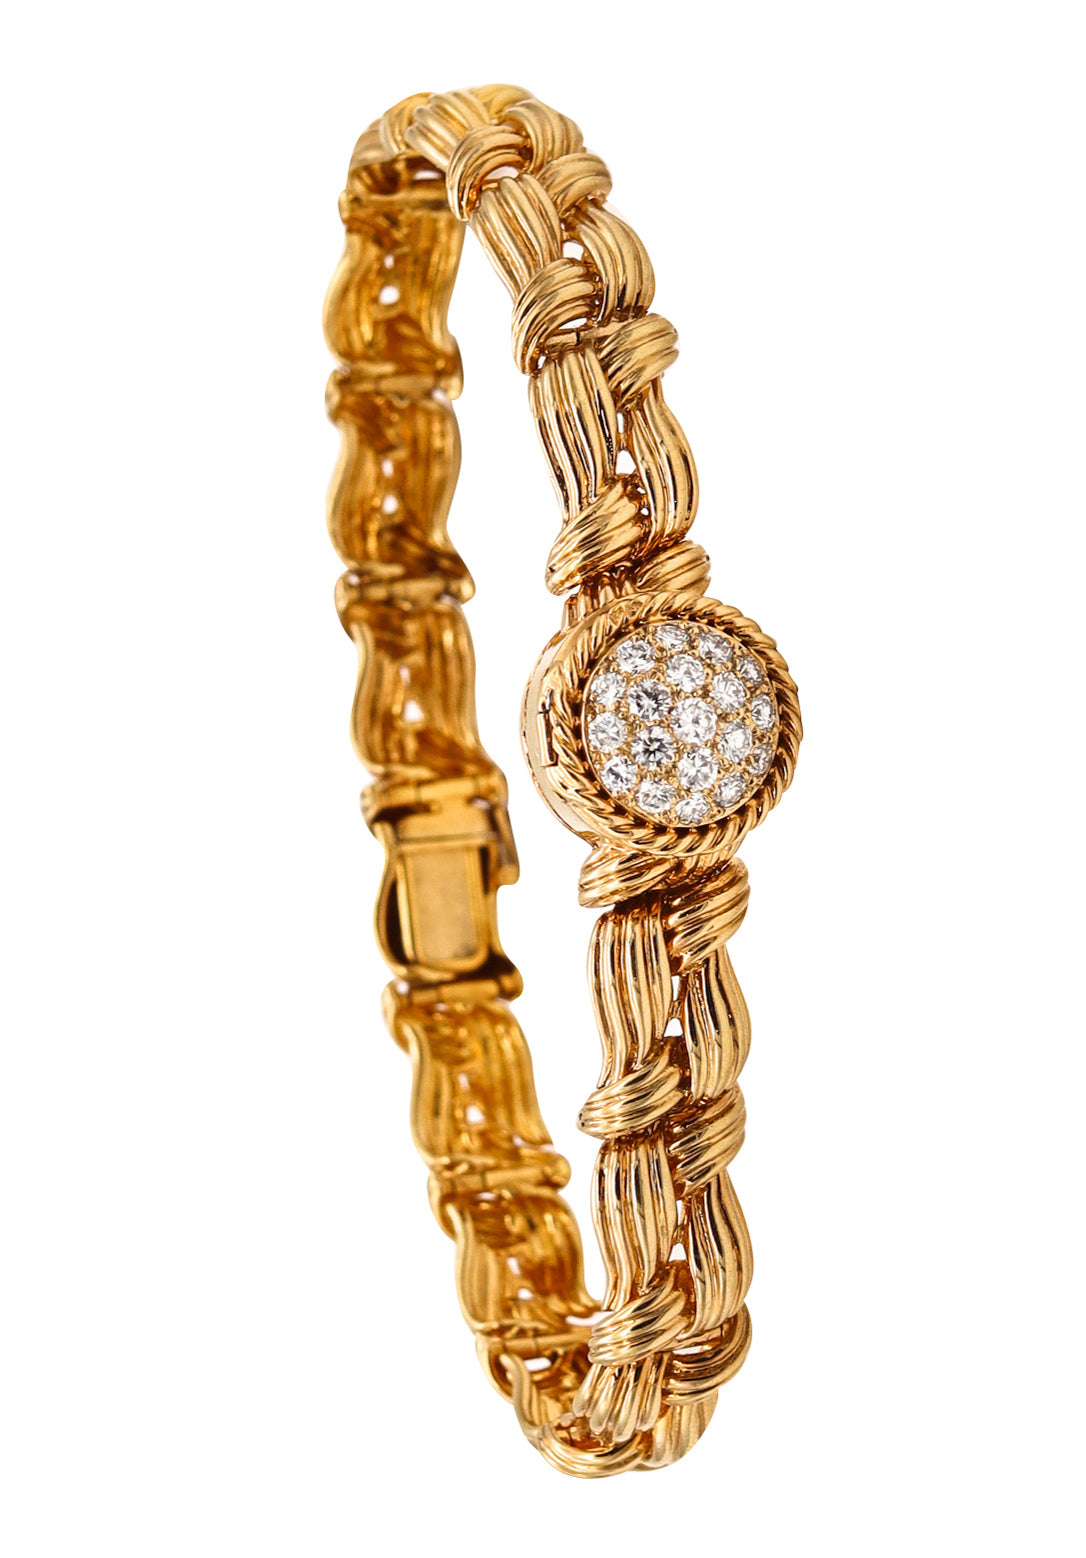 *Boucheron Paris 1970 Bracelet Wristwatch in 18 kt Gold with 1.26 Cts Diamonds